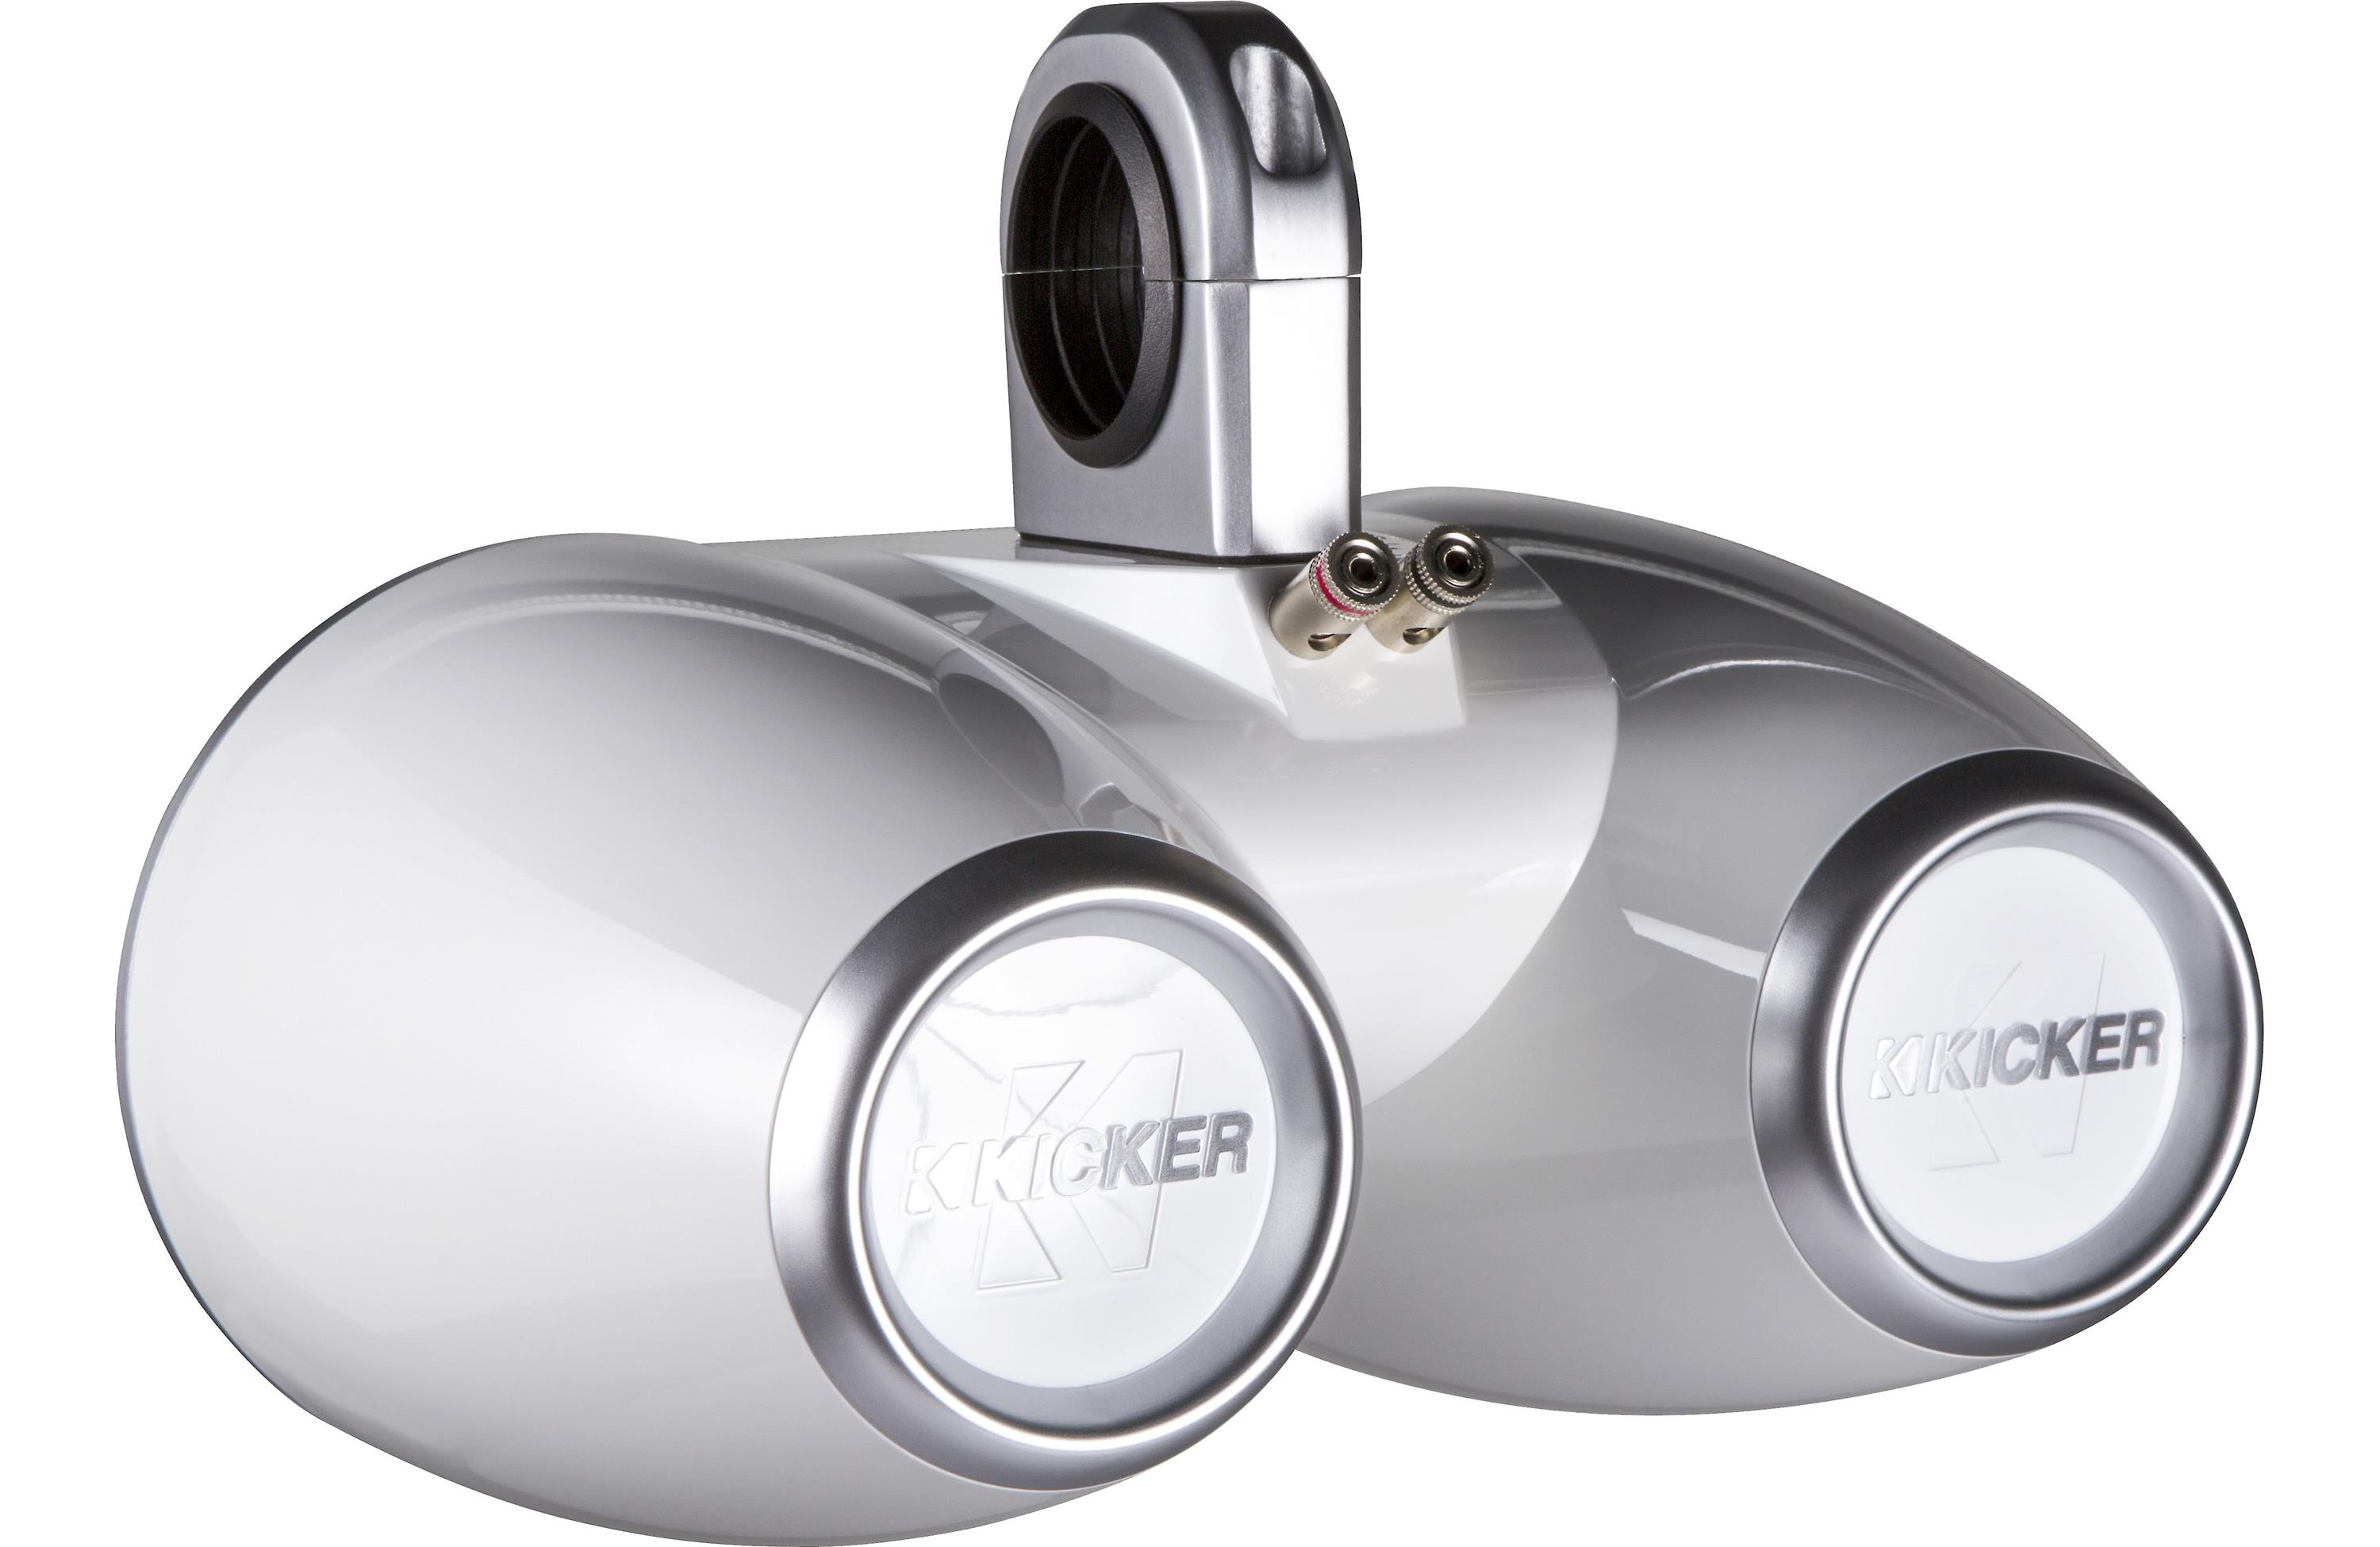 White Kicker Dual Wake Tower System with 4 Kicker 6.5" Marine Speakers - image 3 of 6